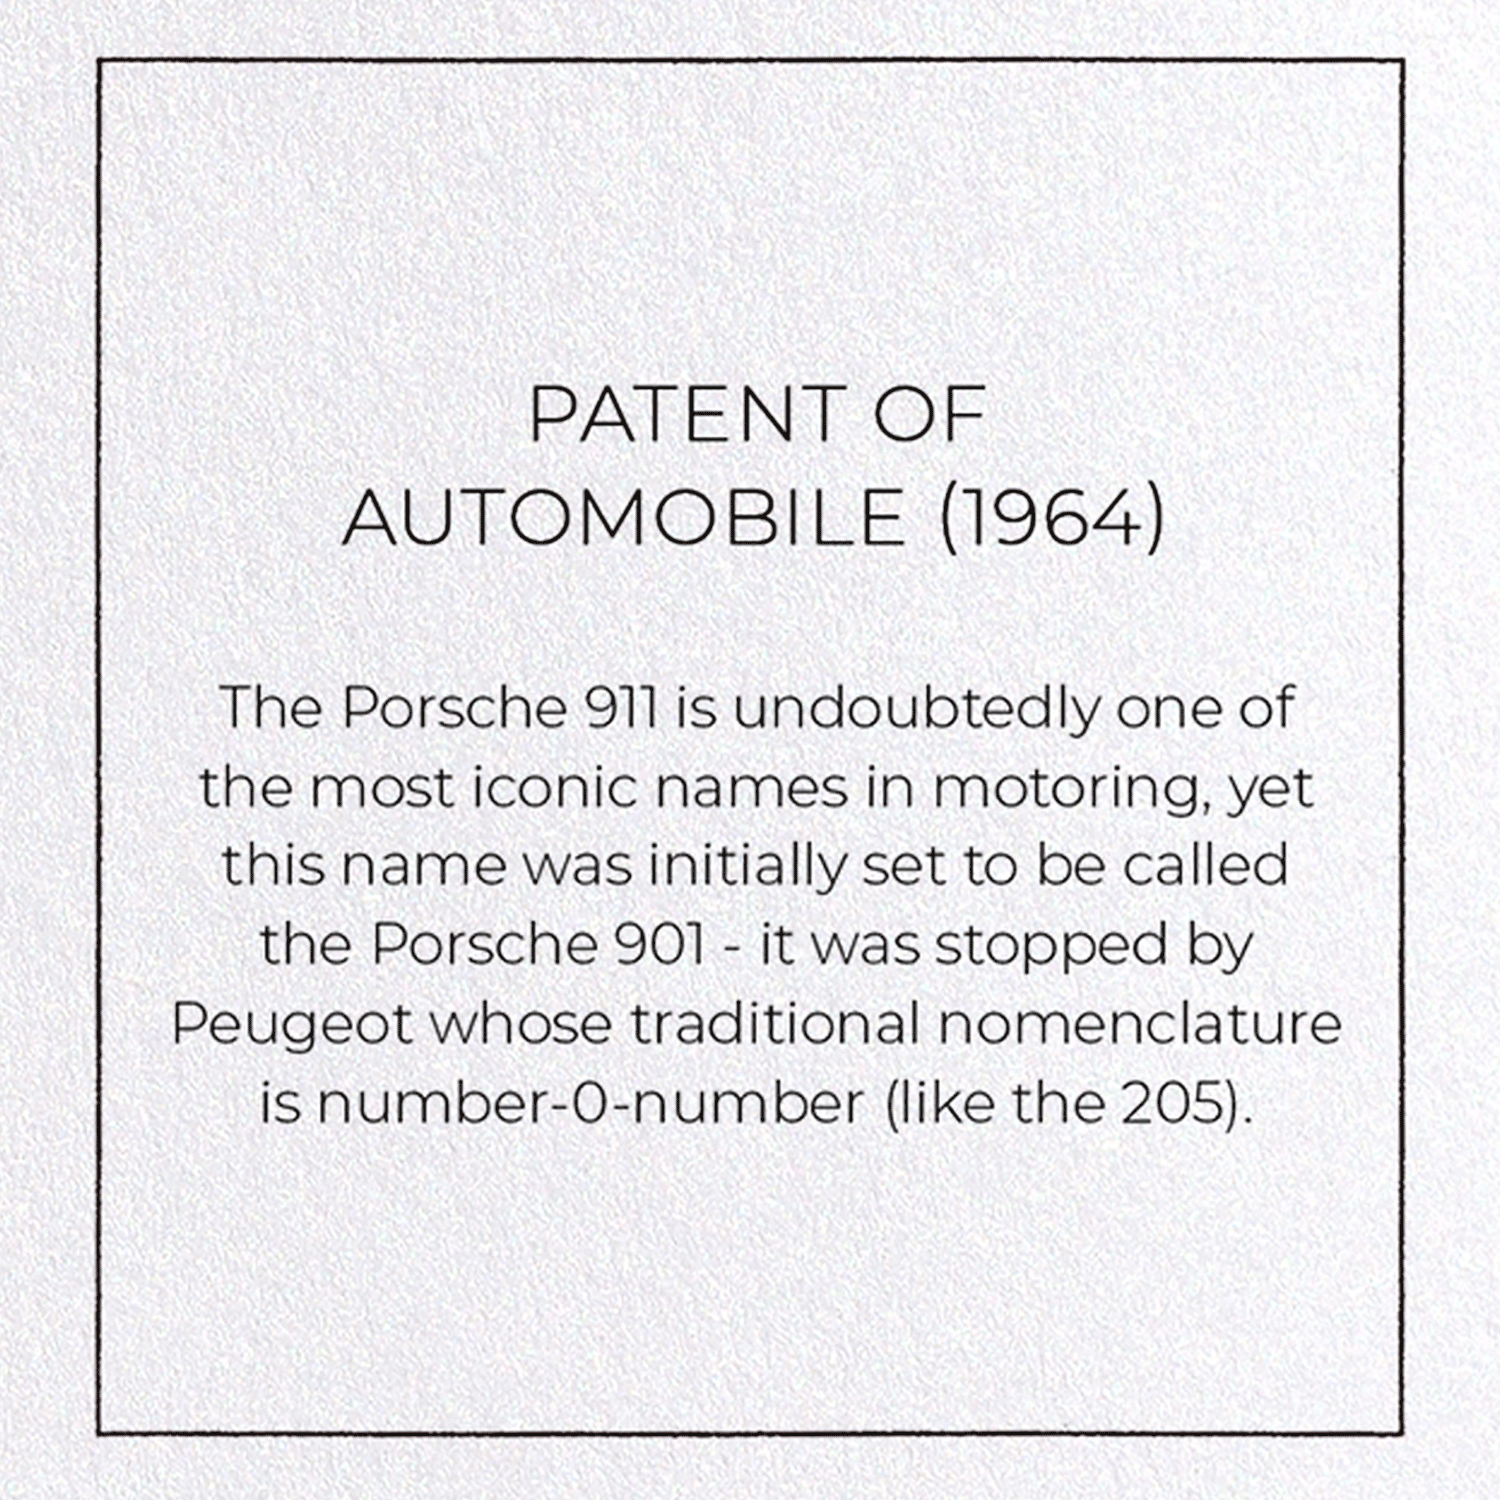 PATENT OF AUTOMOBILE (1964)